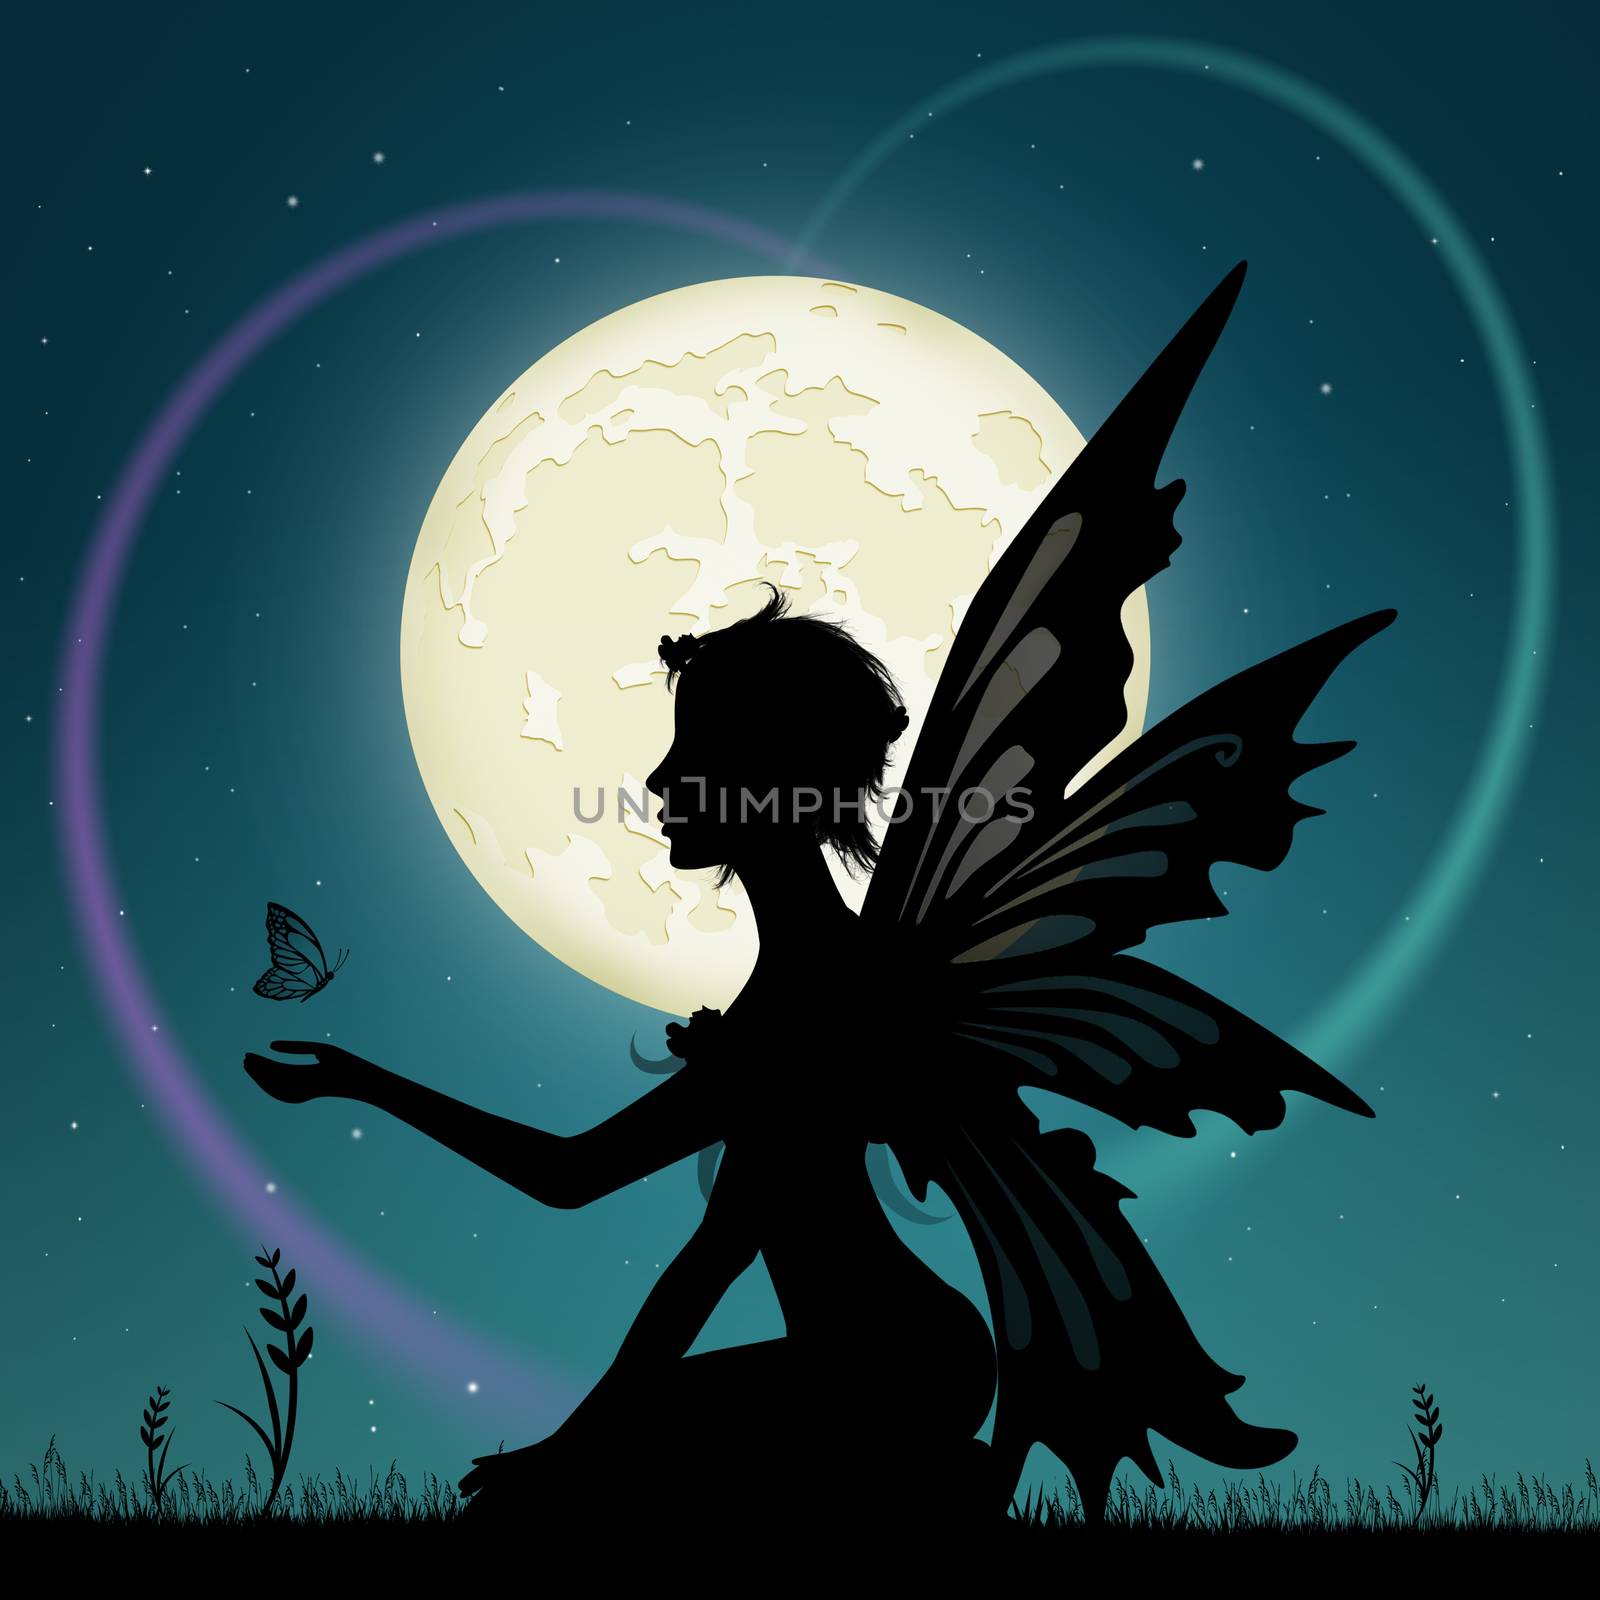 illustration of fairy in the moonlight